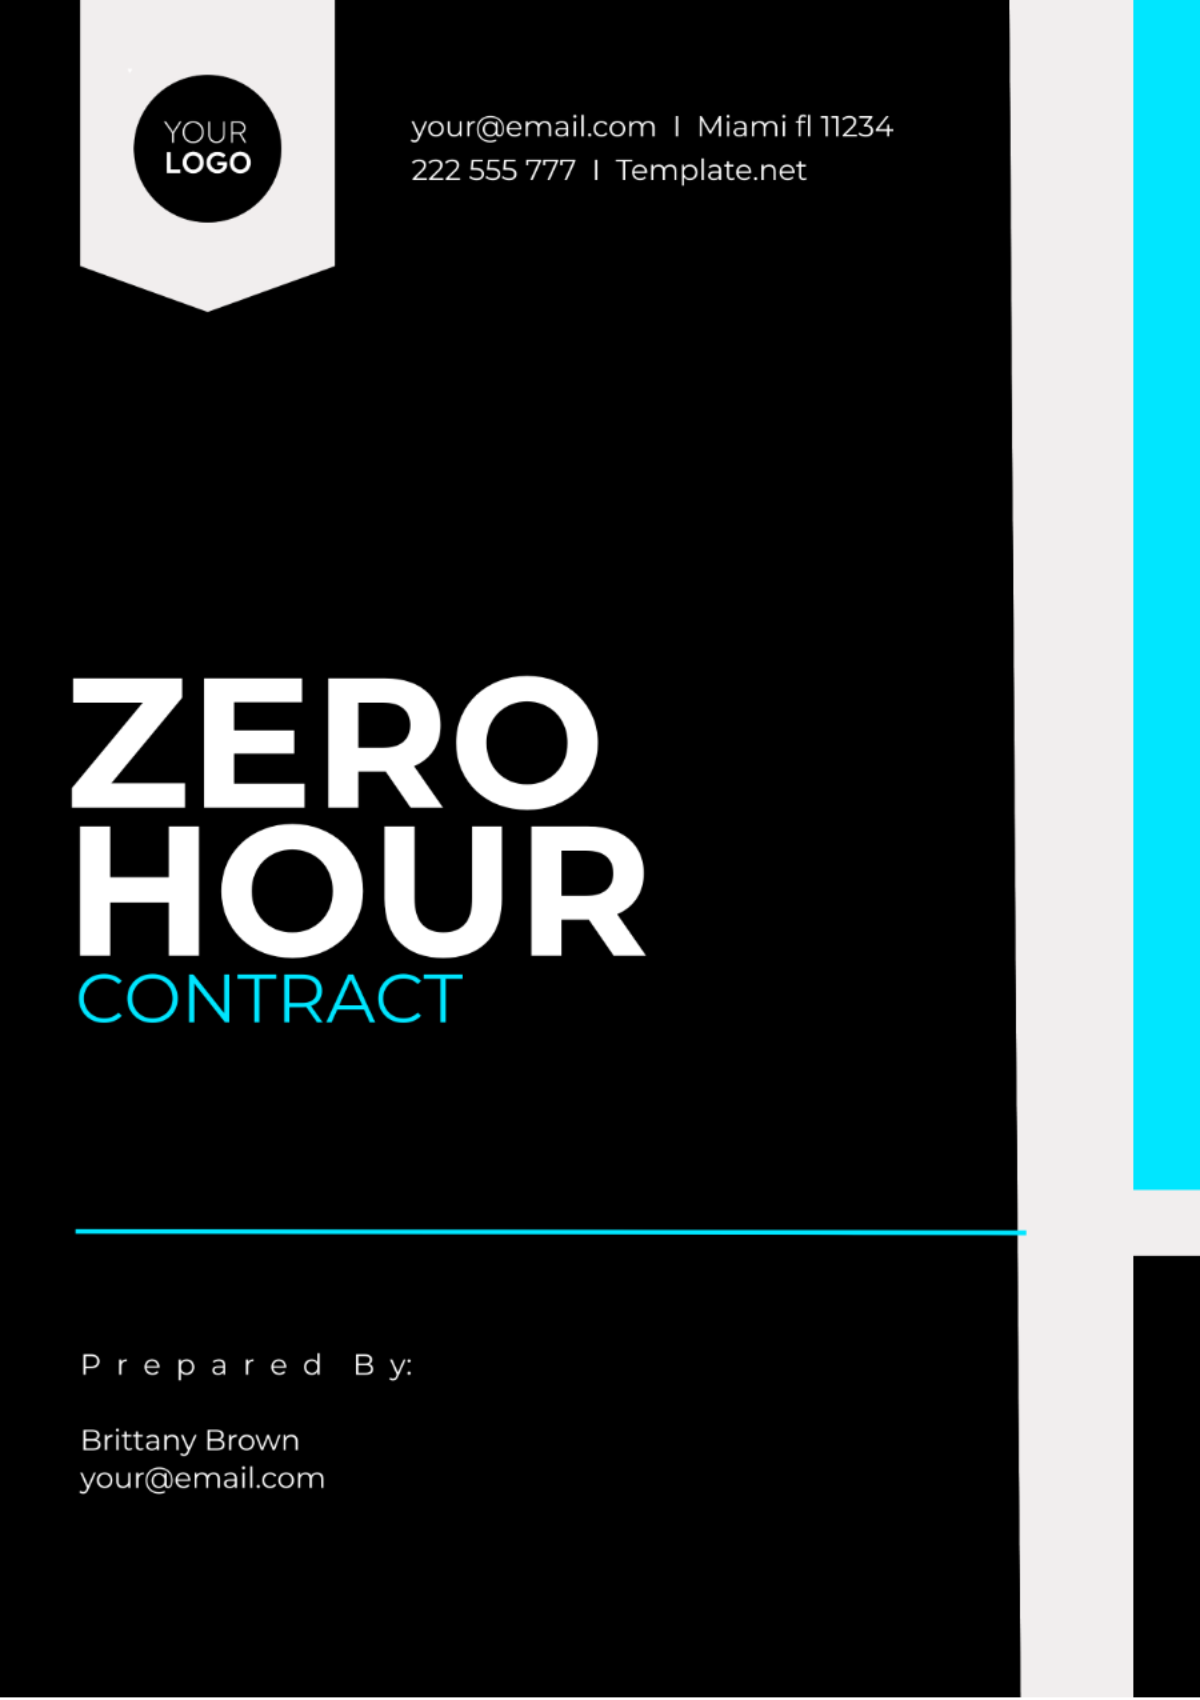 Zero Hour Contract Template